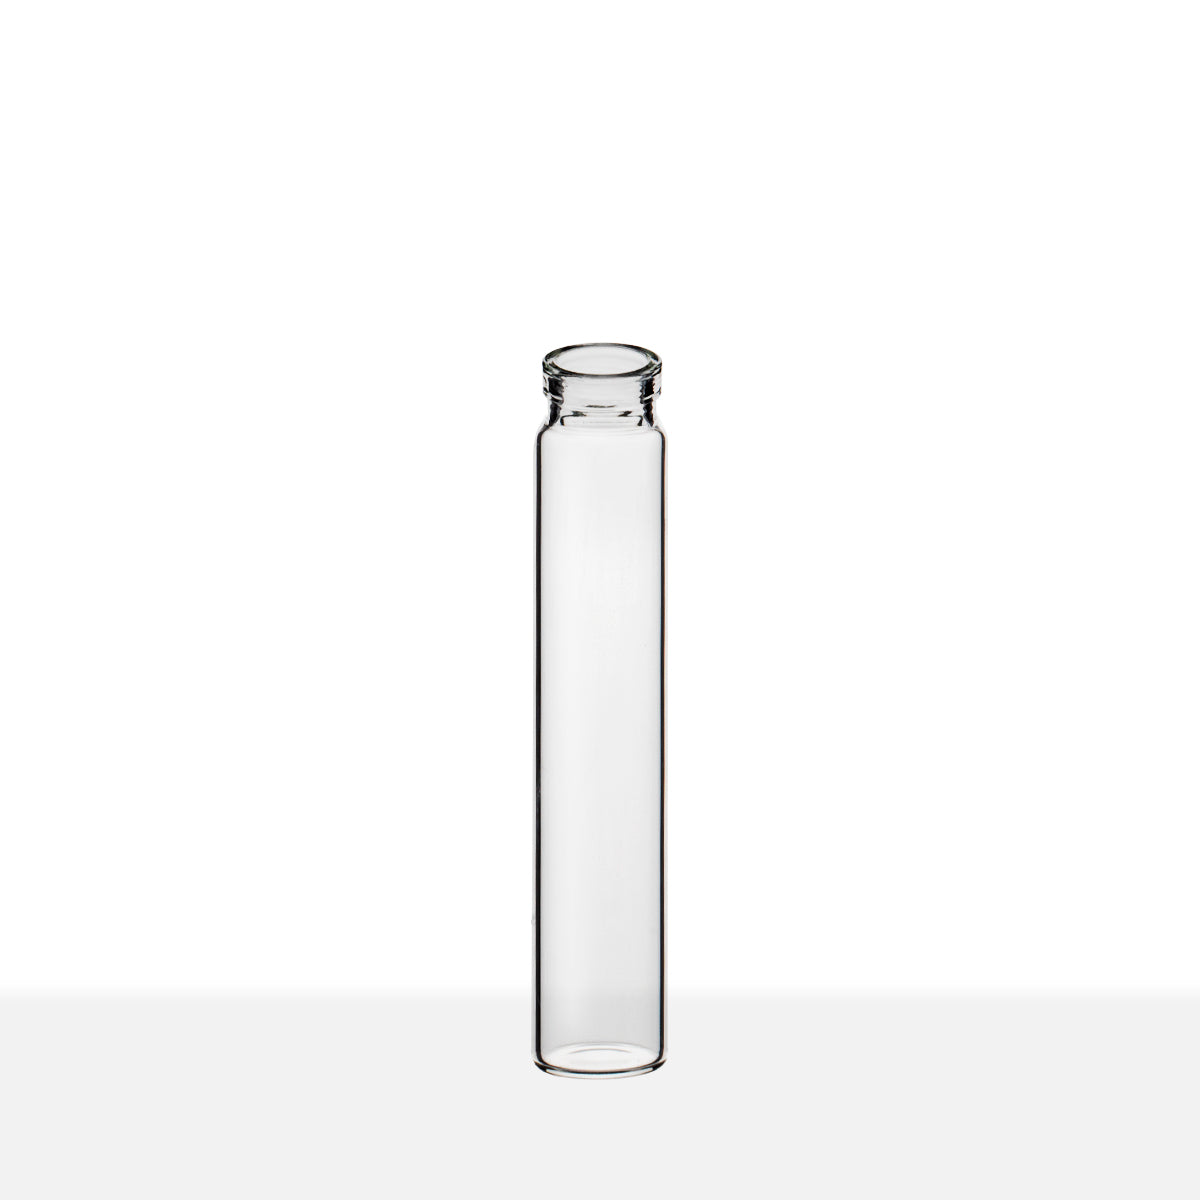 PATENT LIP GLASS VIALS - CLEAR Item #:VCPC1260